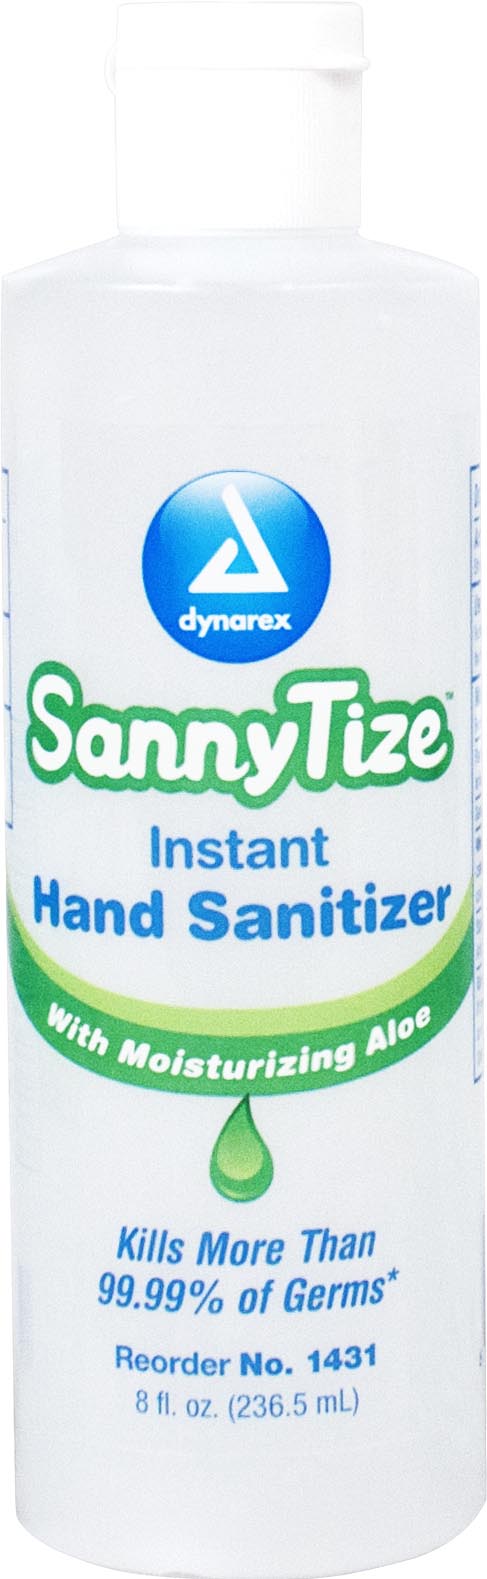 1431 Dynarex Sannytize即时洗手液含有62%的酒精，装在8盎司的瓶子里